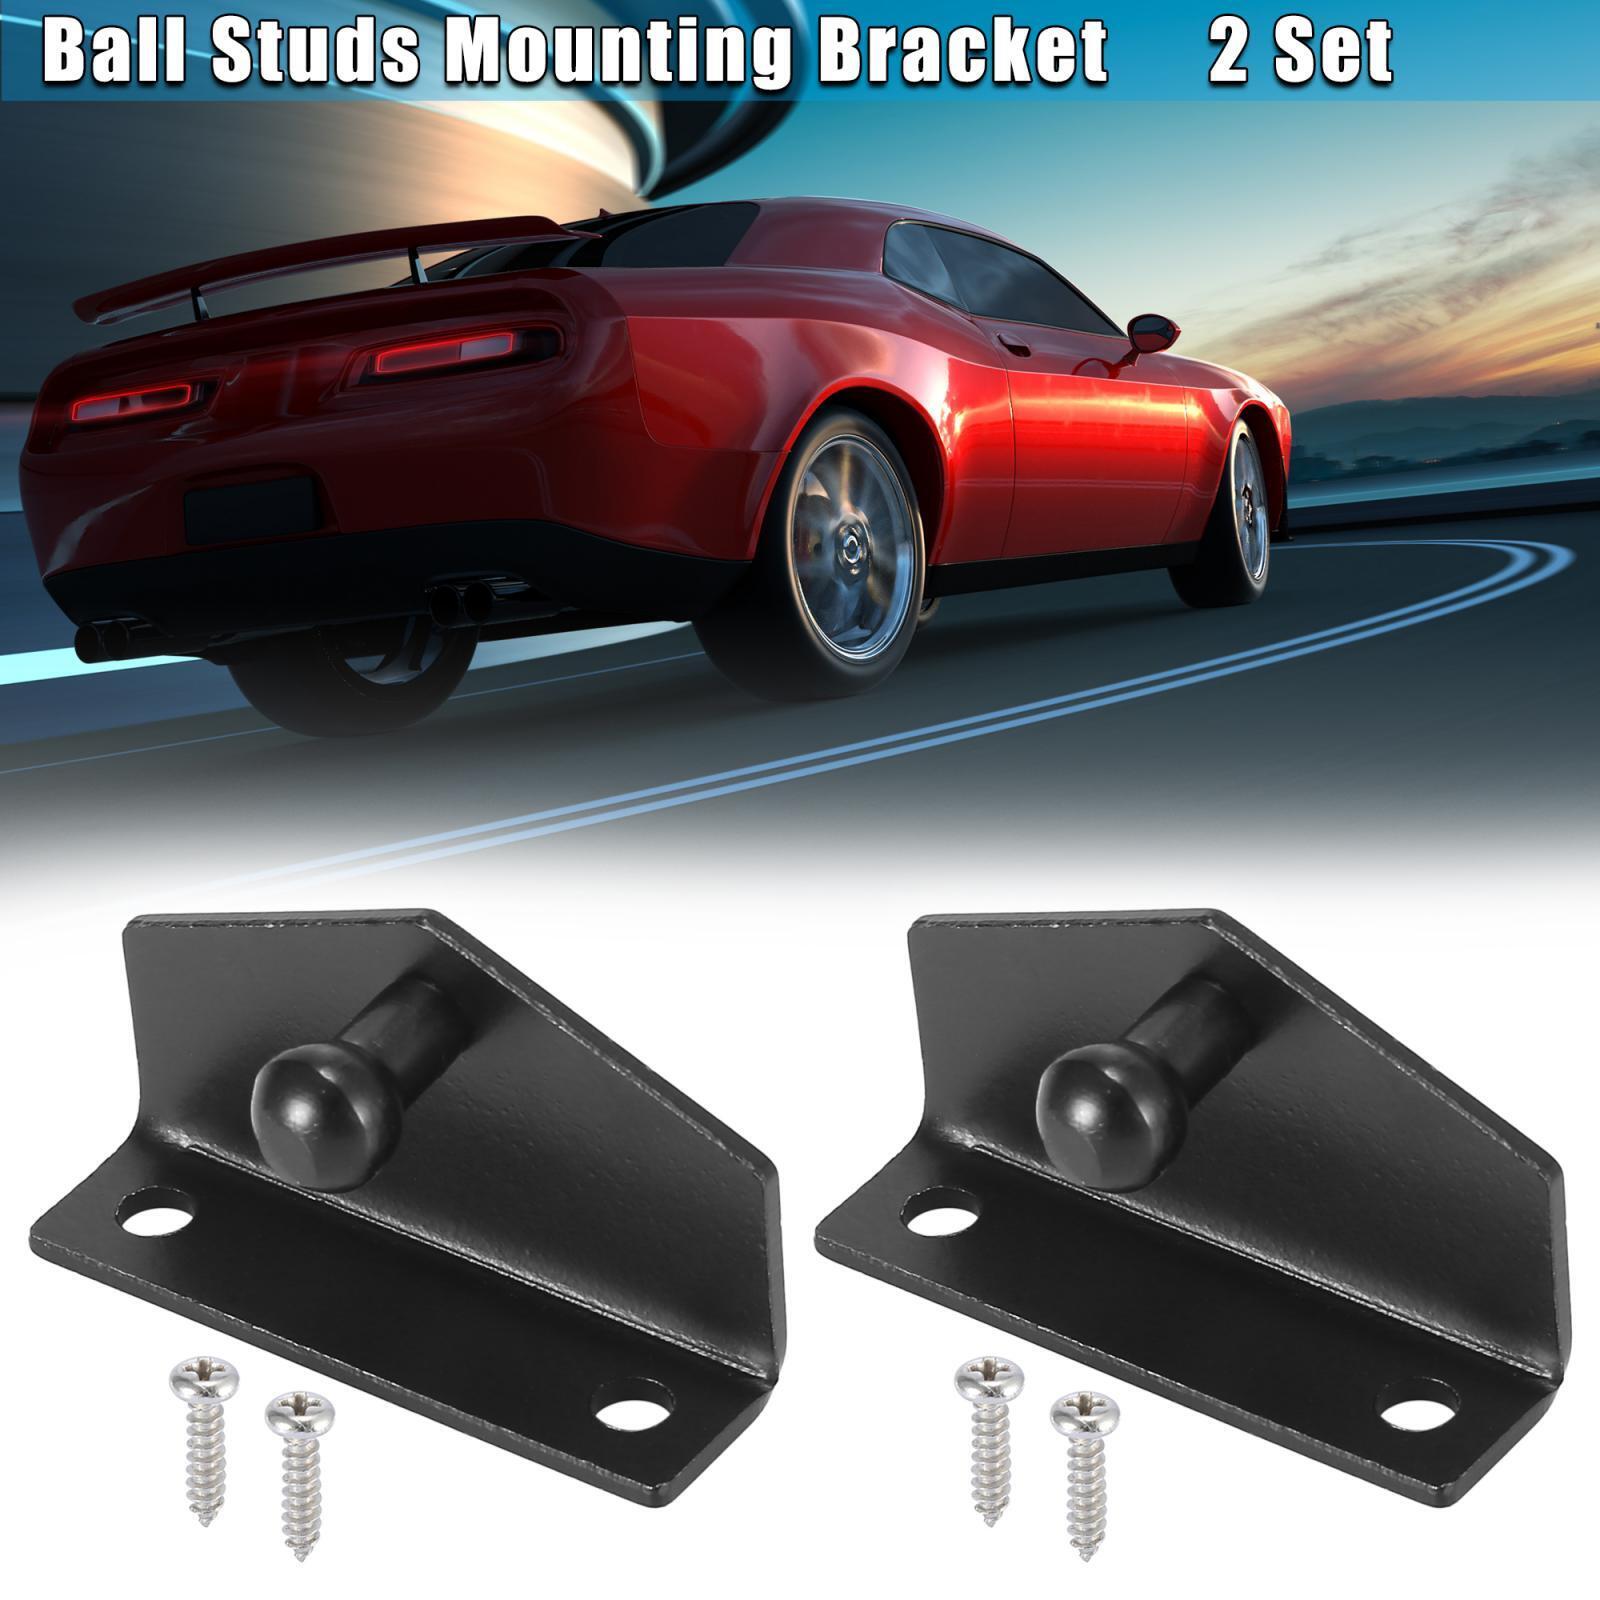 2 Set Black Car Ball Studs Mounting Brackets For Gas Struts Shocks 51x29x19mm